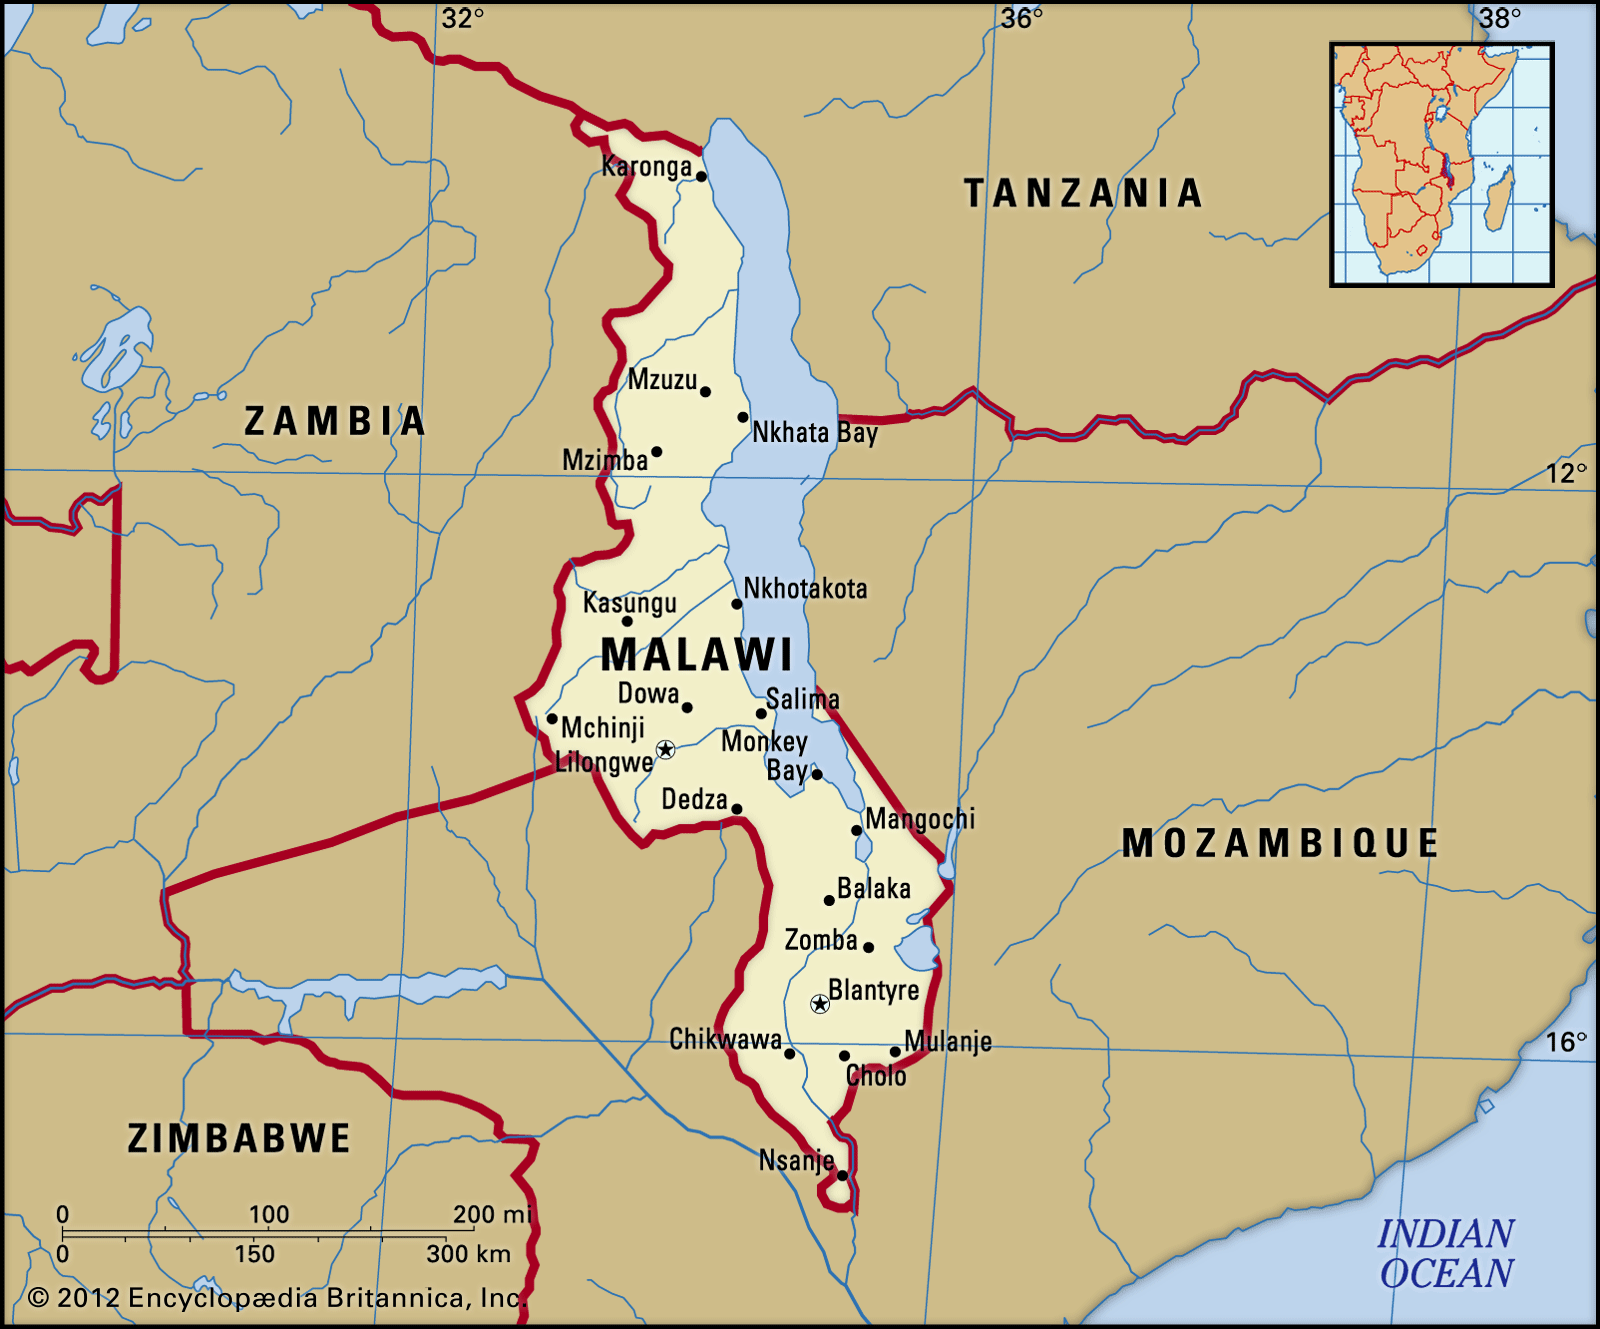 Malawi lands minister arrested on corruption charges